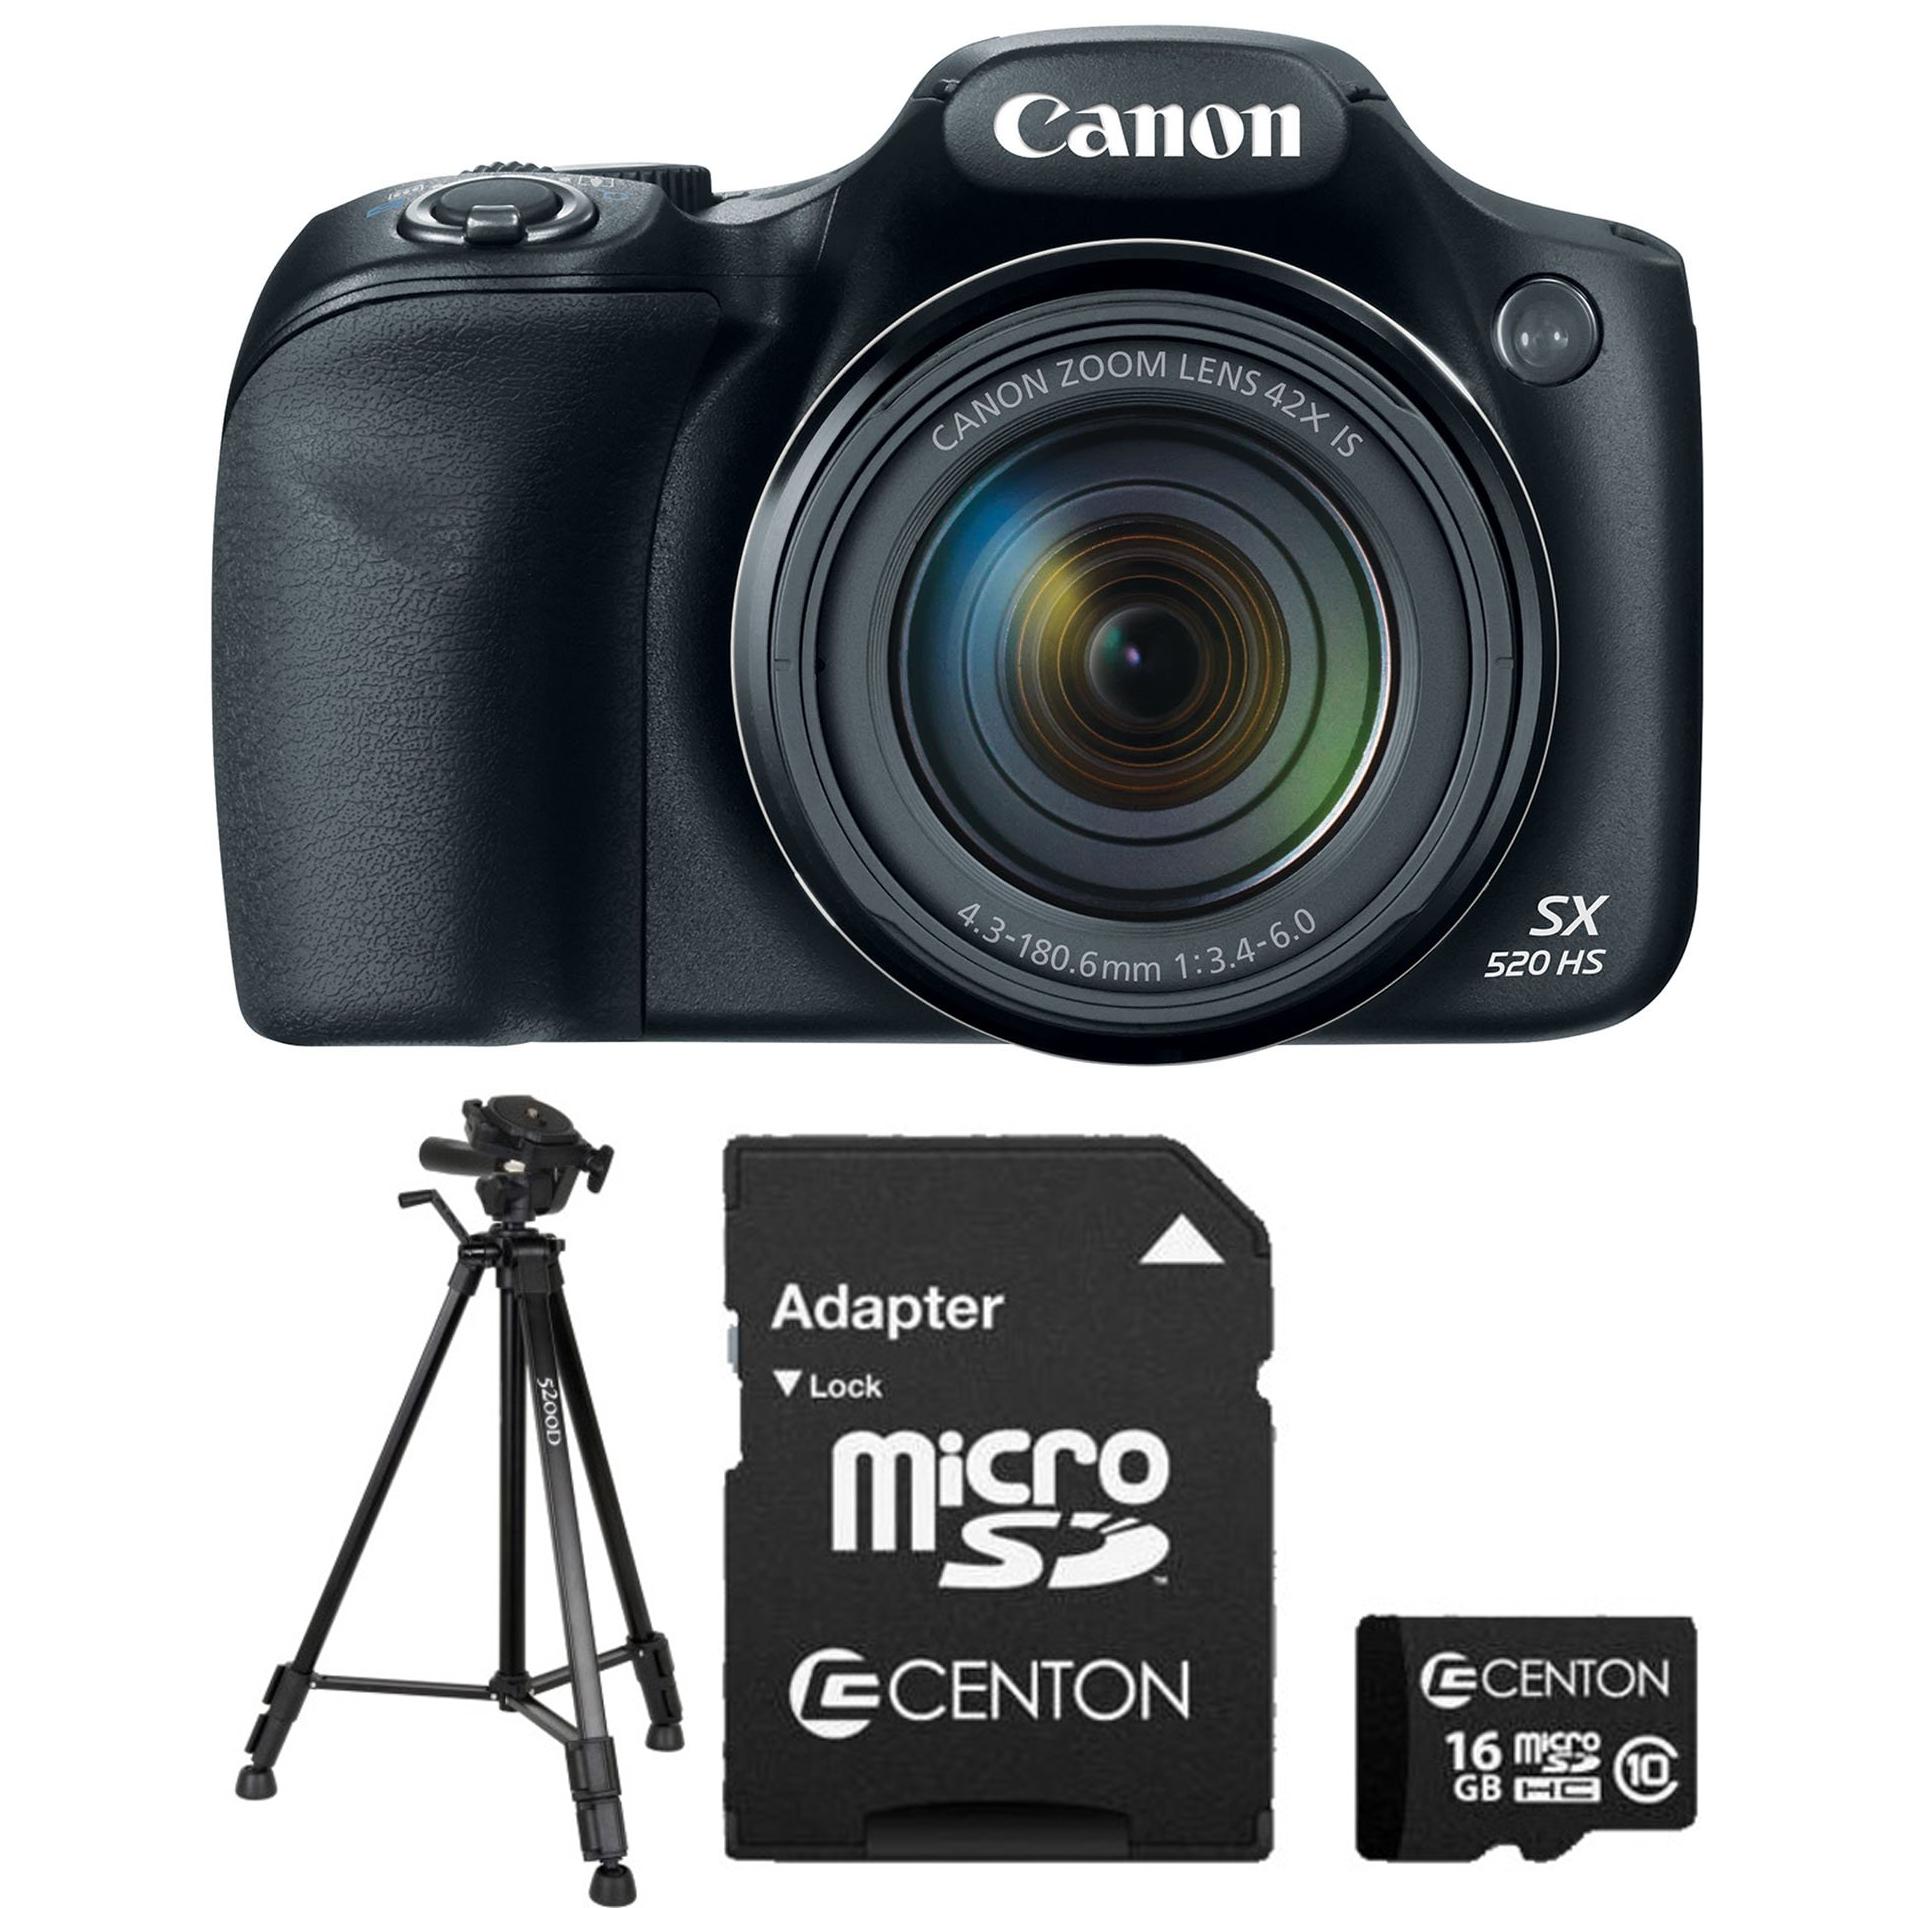 Canon PowerShot SX520 HS Digital Camera with BONUS Memory Card and Tripod Value Bundle - image 1 of 4